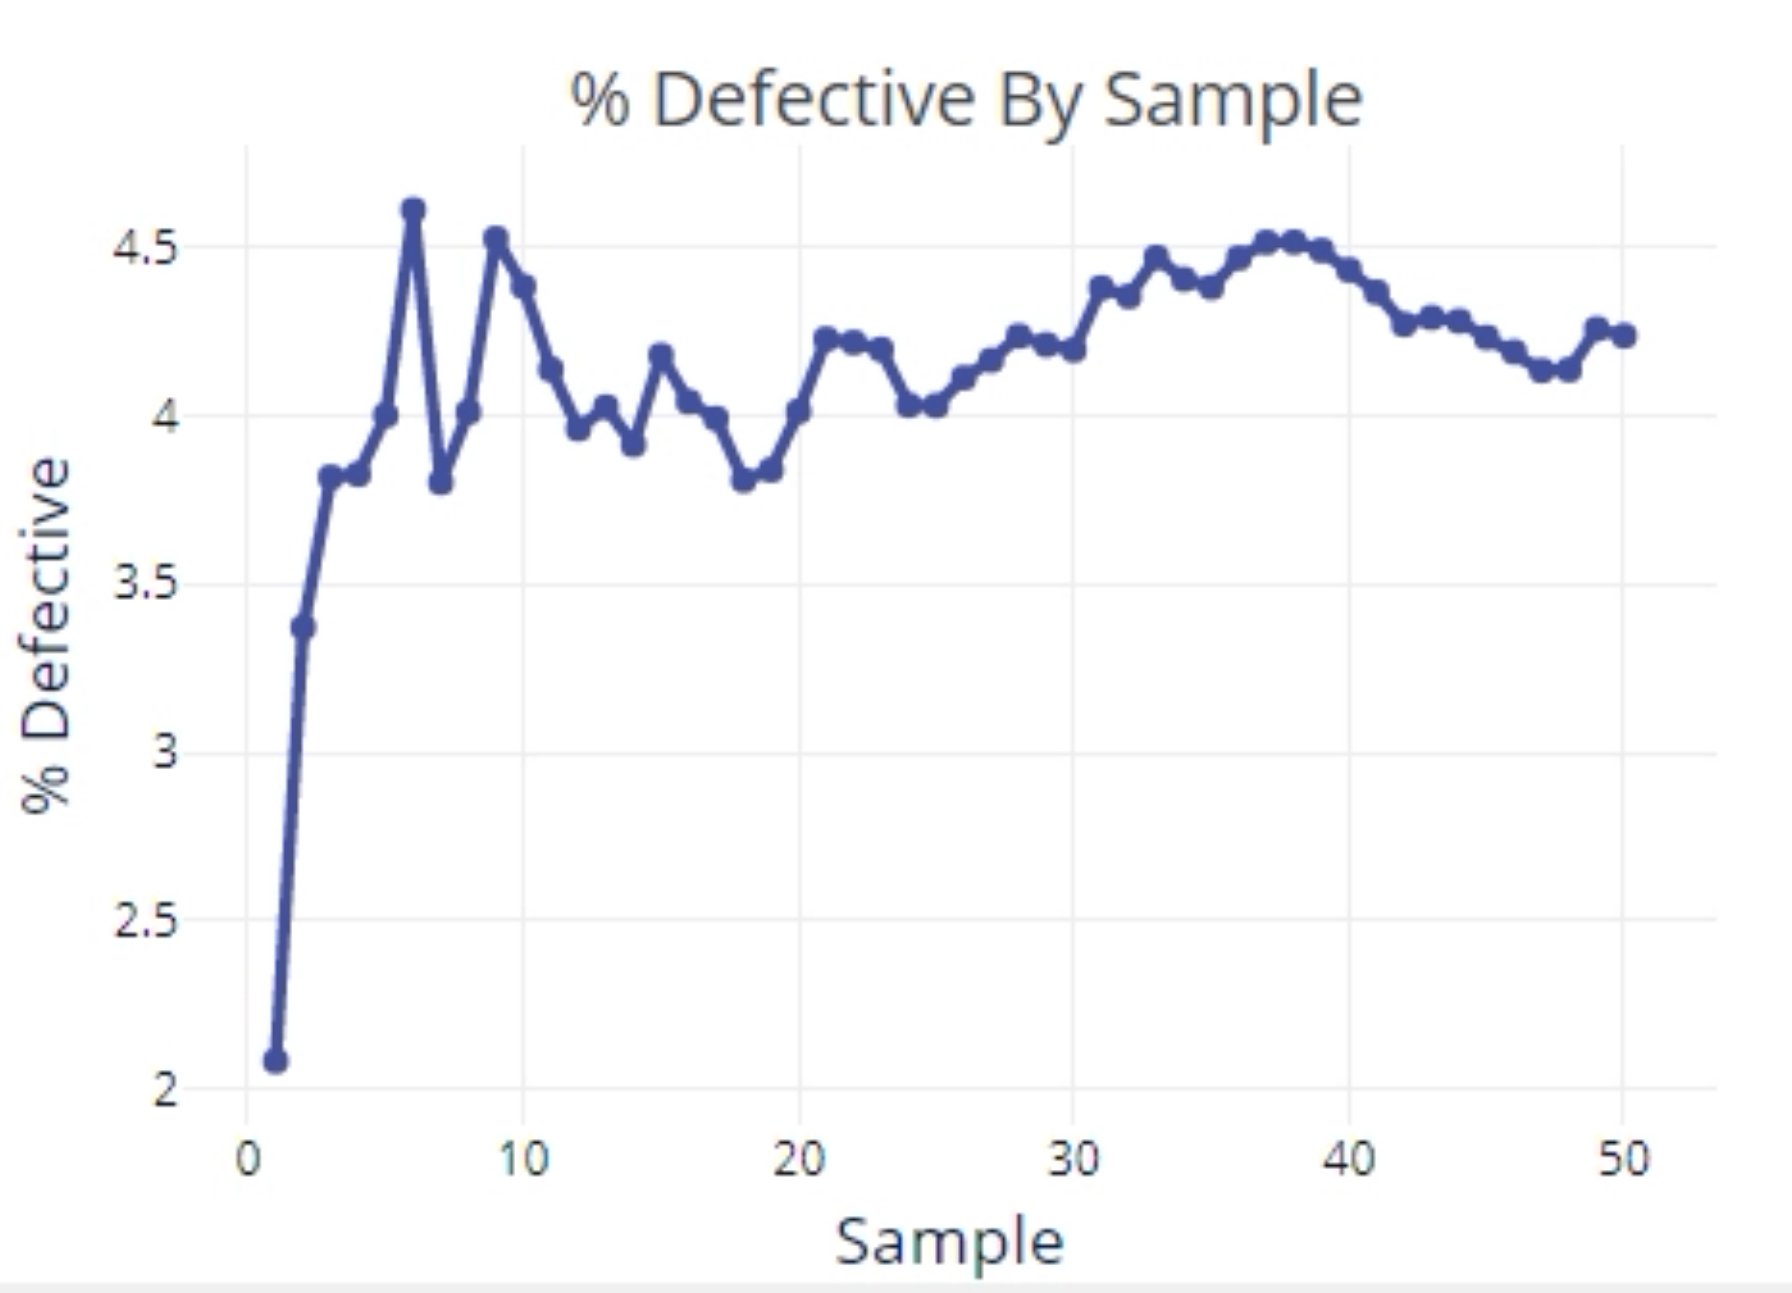 NNPC discrete %Defective chart.